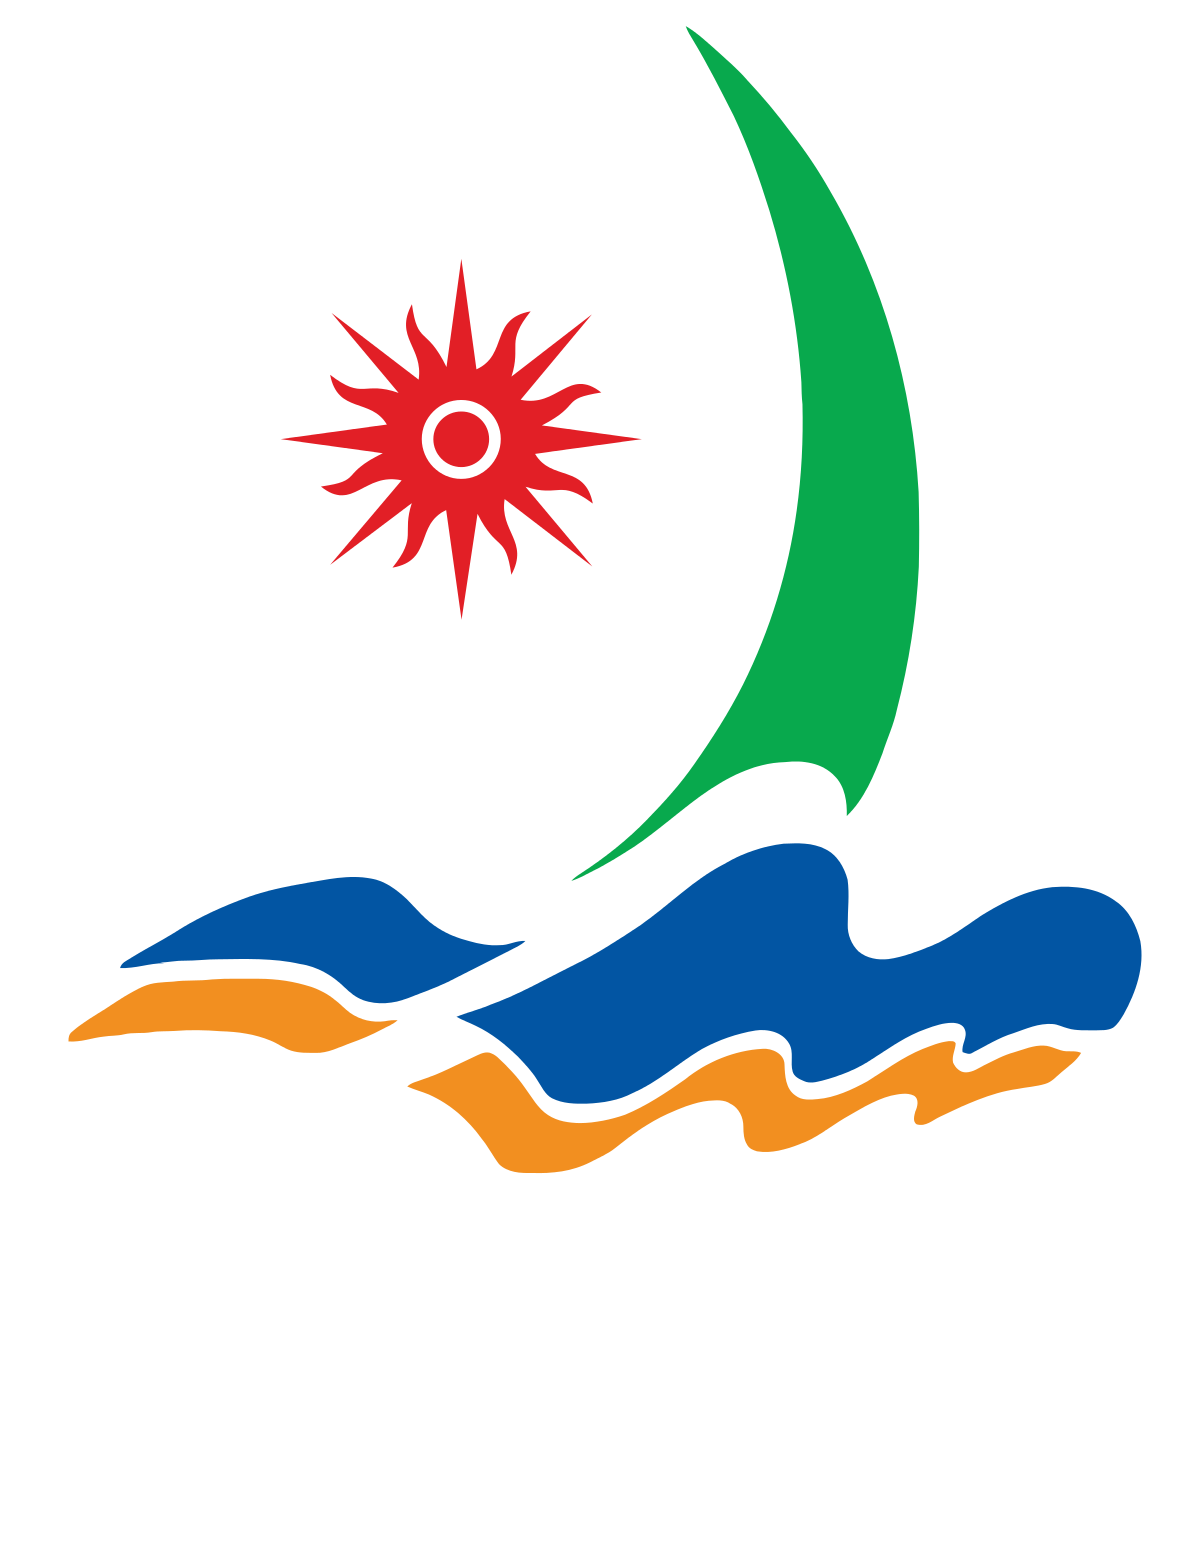 Muscat 2010